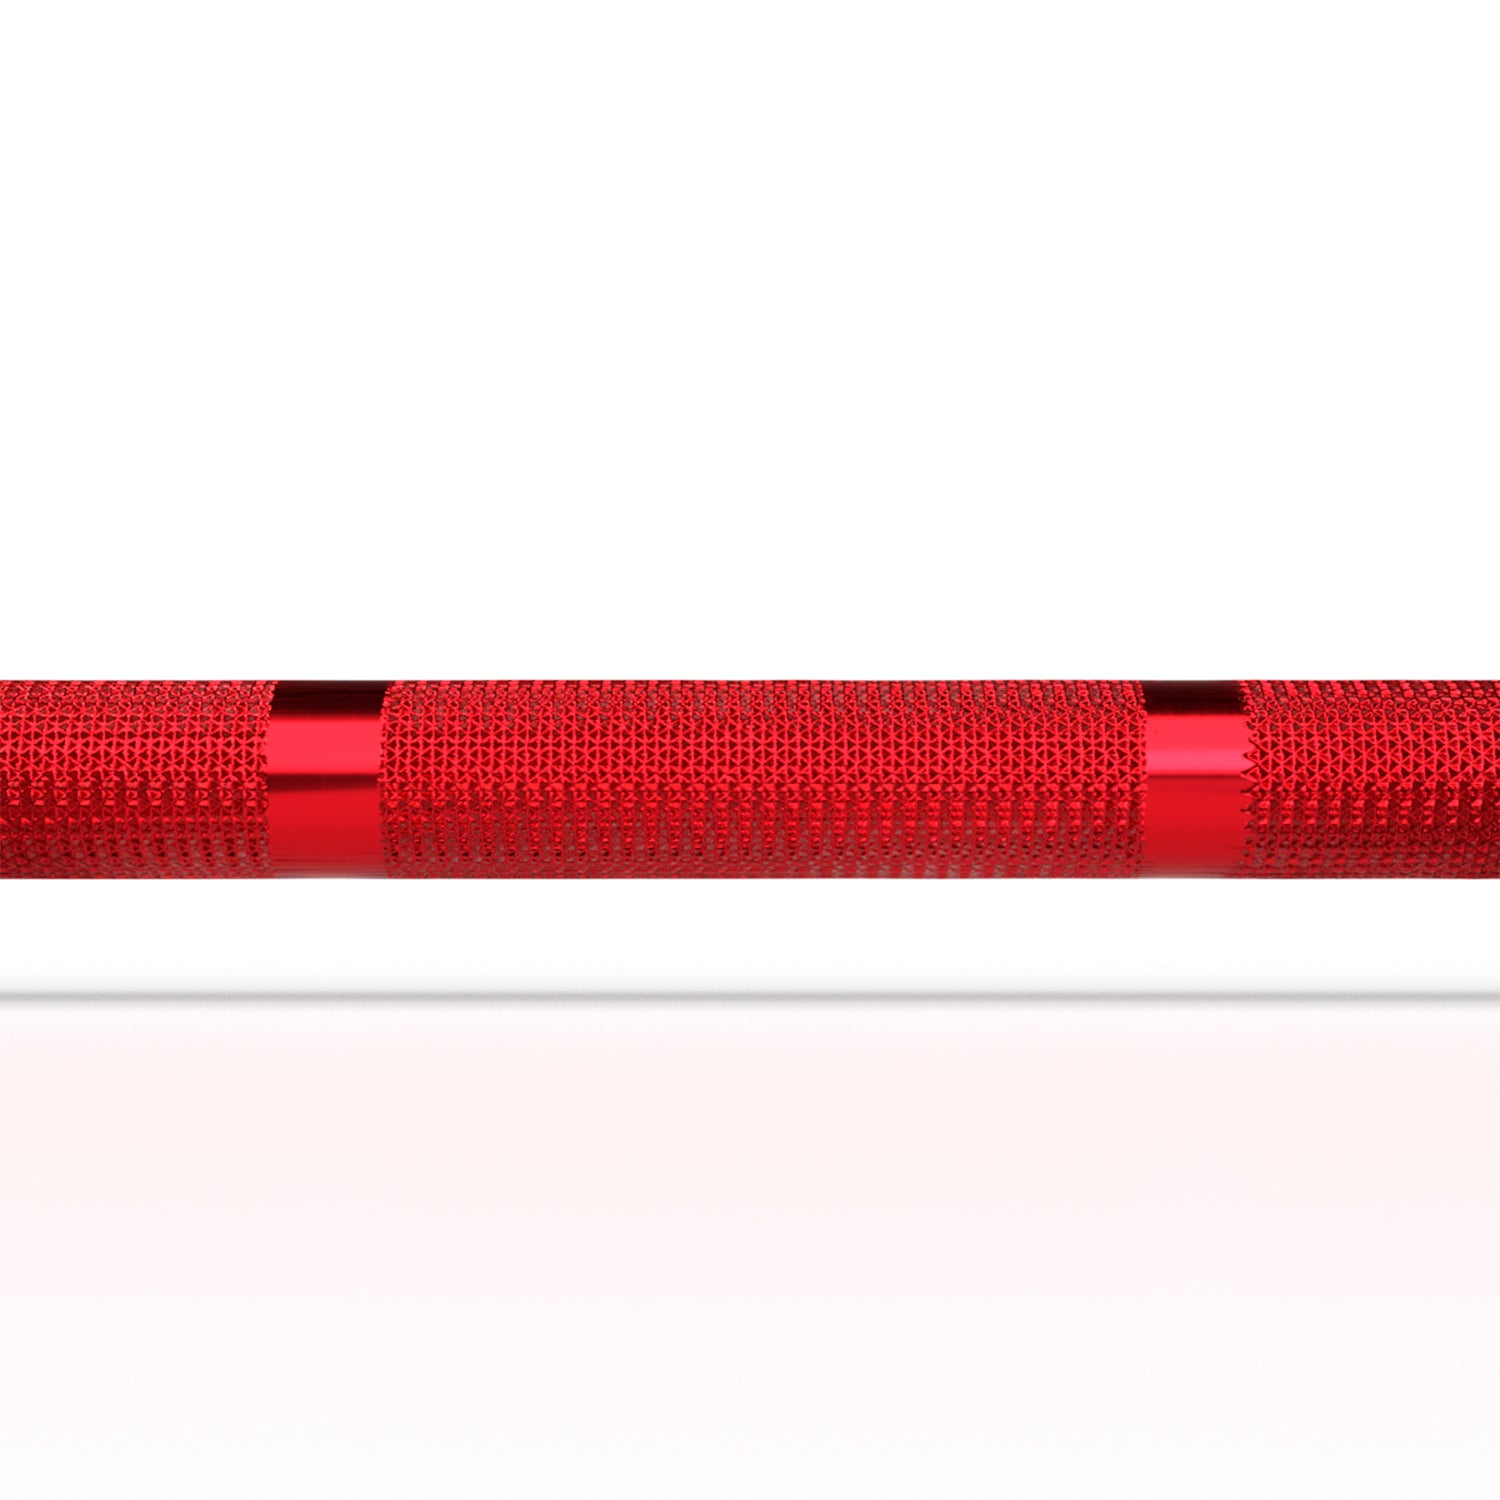 Barra olimpica crossfit Roja 20kg, foto detalle grip diamantado